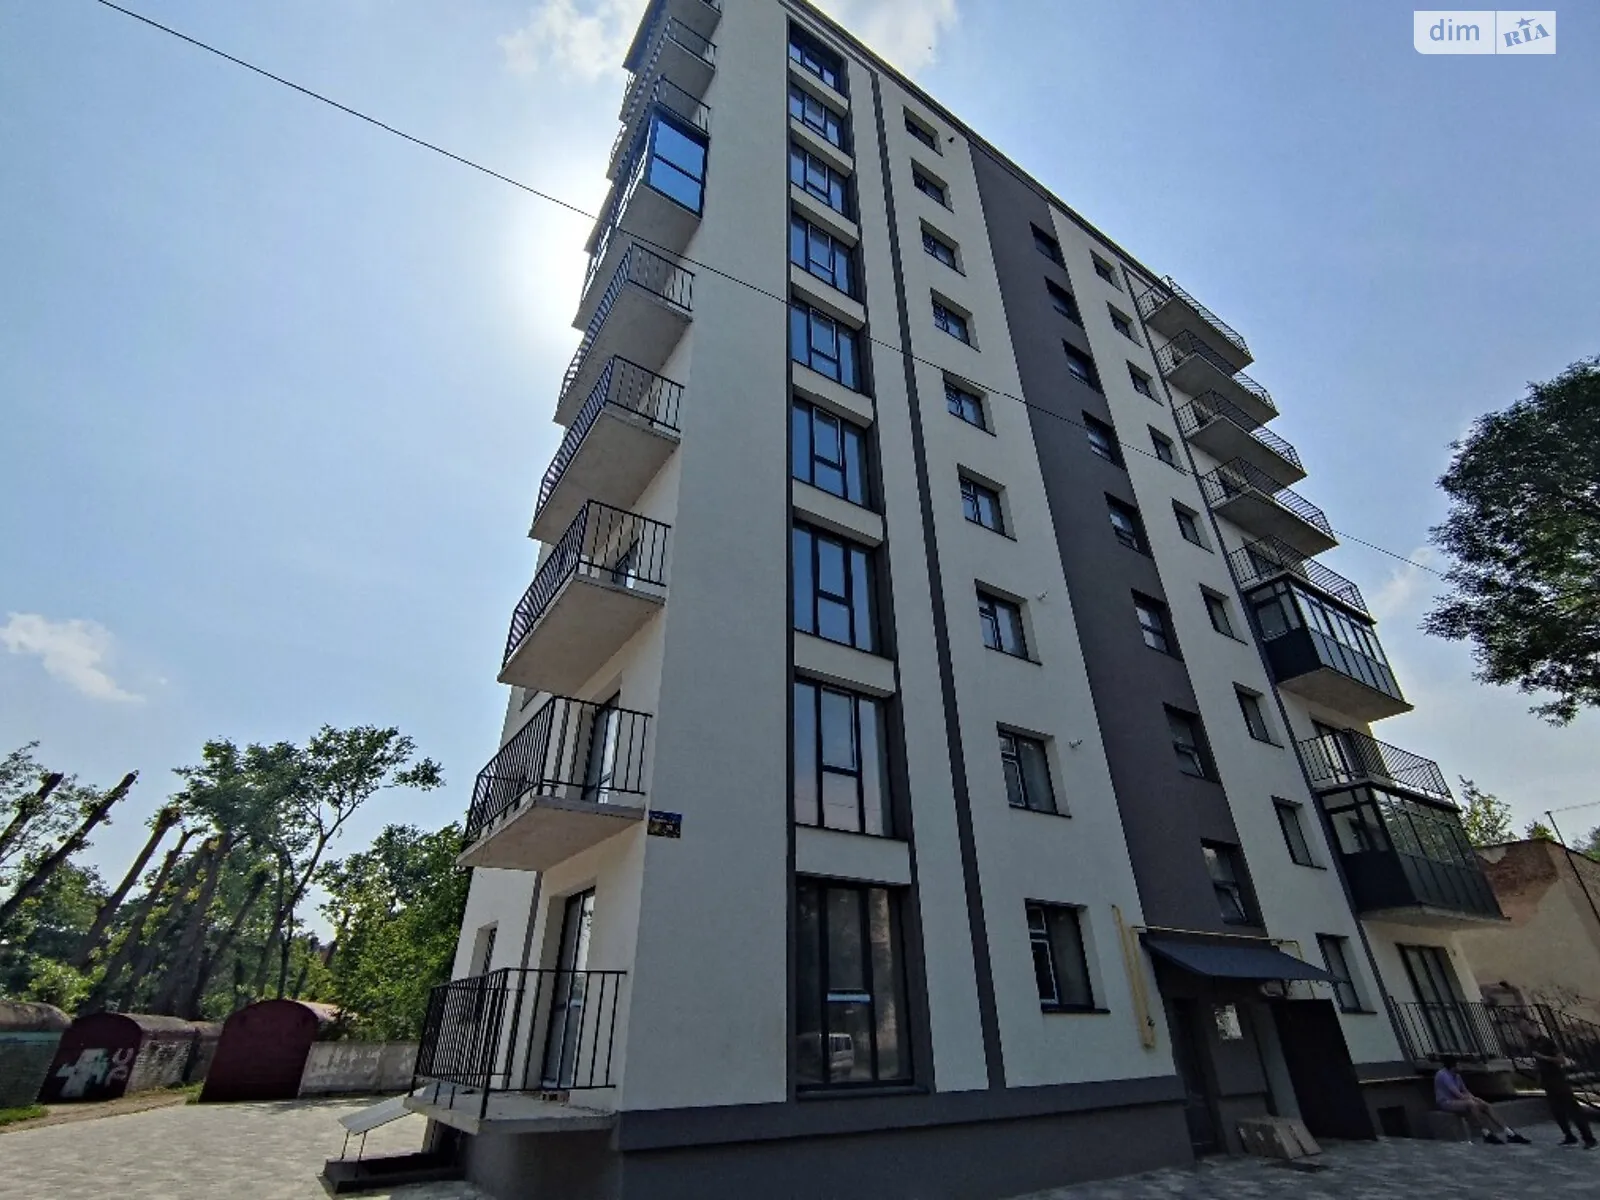 2-кімнатна квартира 64 кв. м у Тернополі, цена: 41600 $ - фото 1